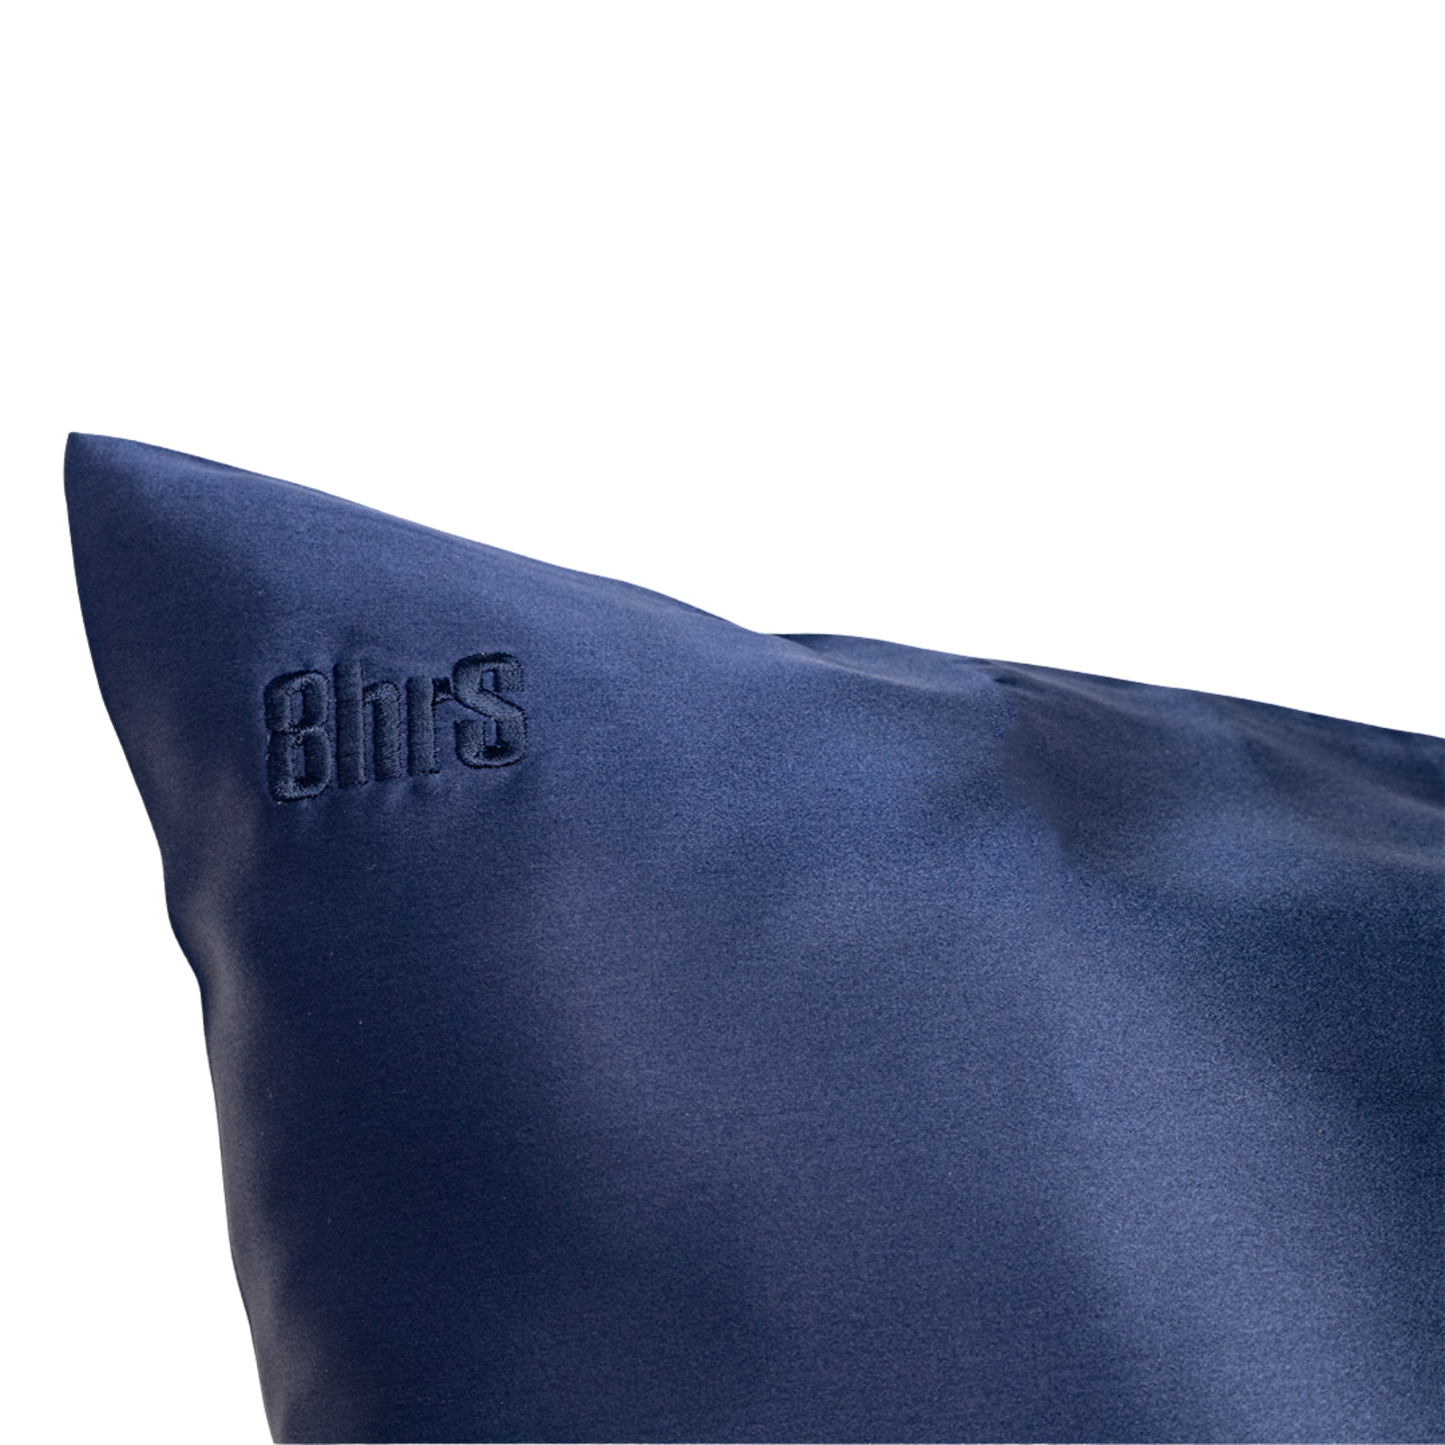 Mulberry Silk Pillowcase - Midnight Blue